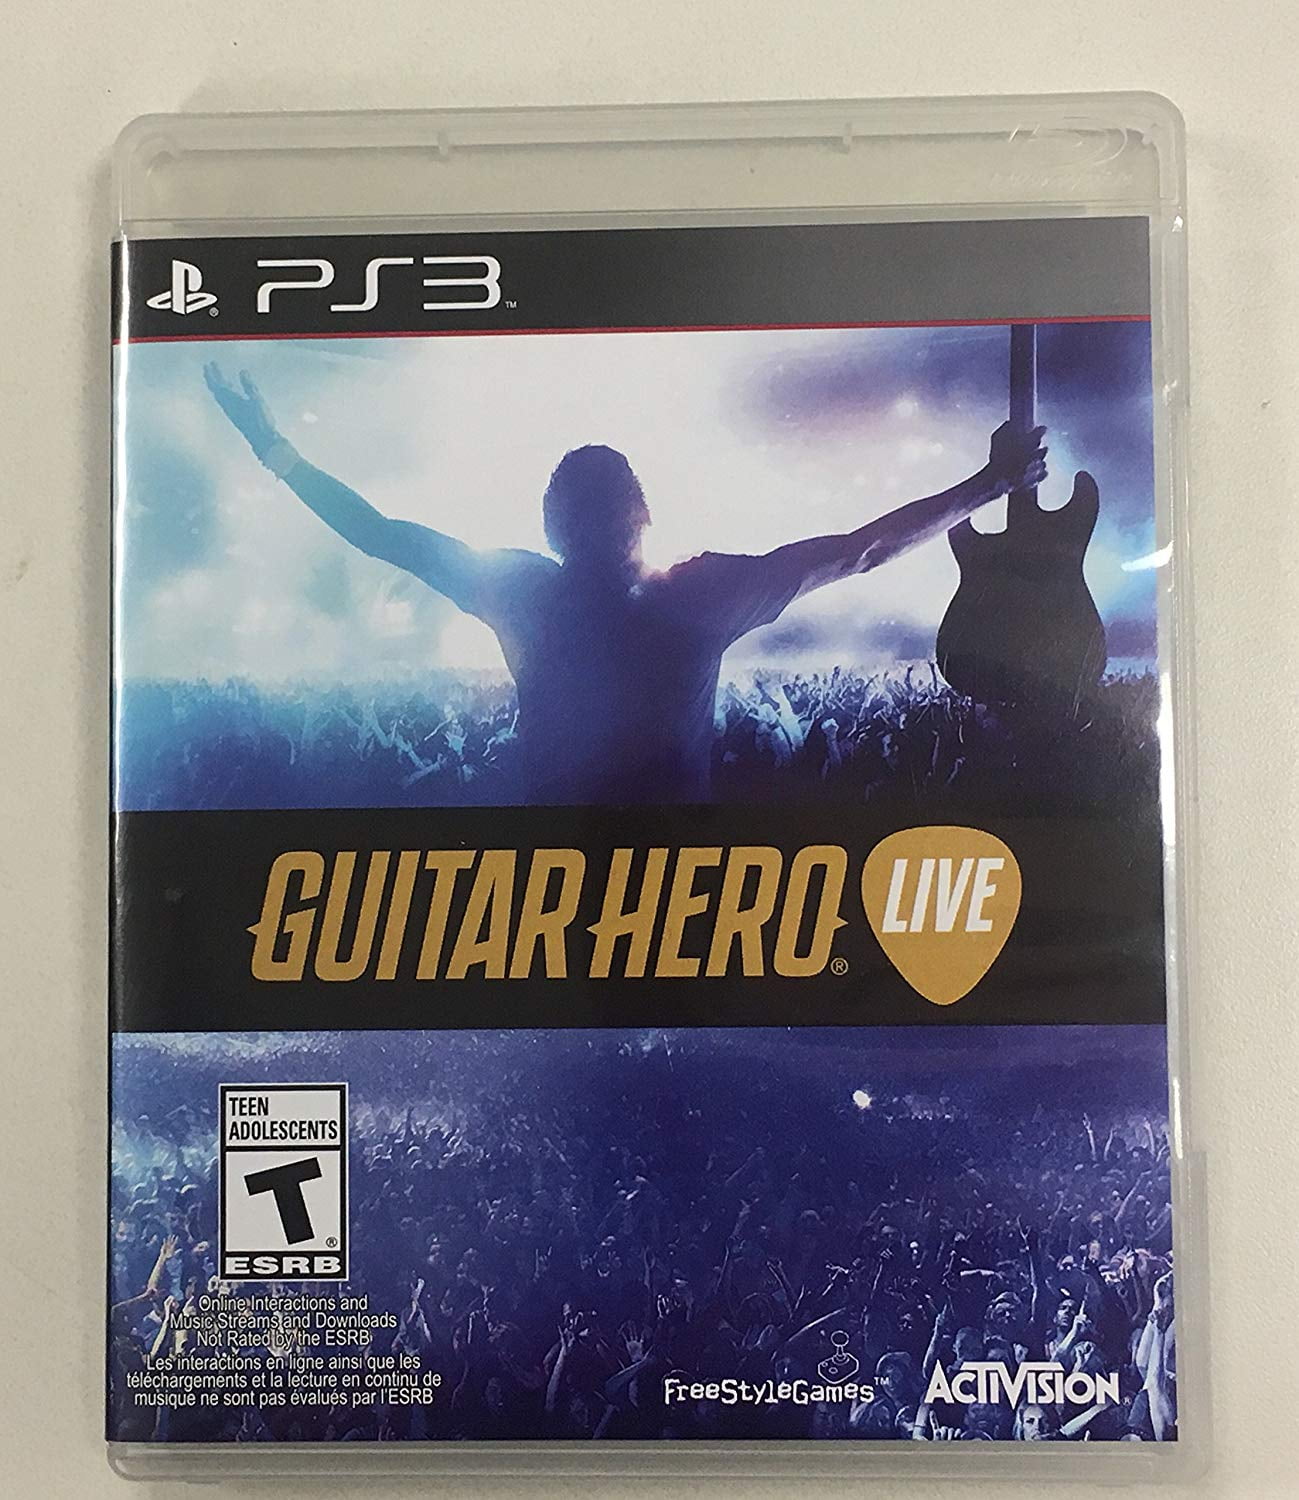  Guitar Hero Live 2-Pack Bundle - PlayStation 4 : Video Games